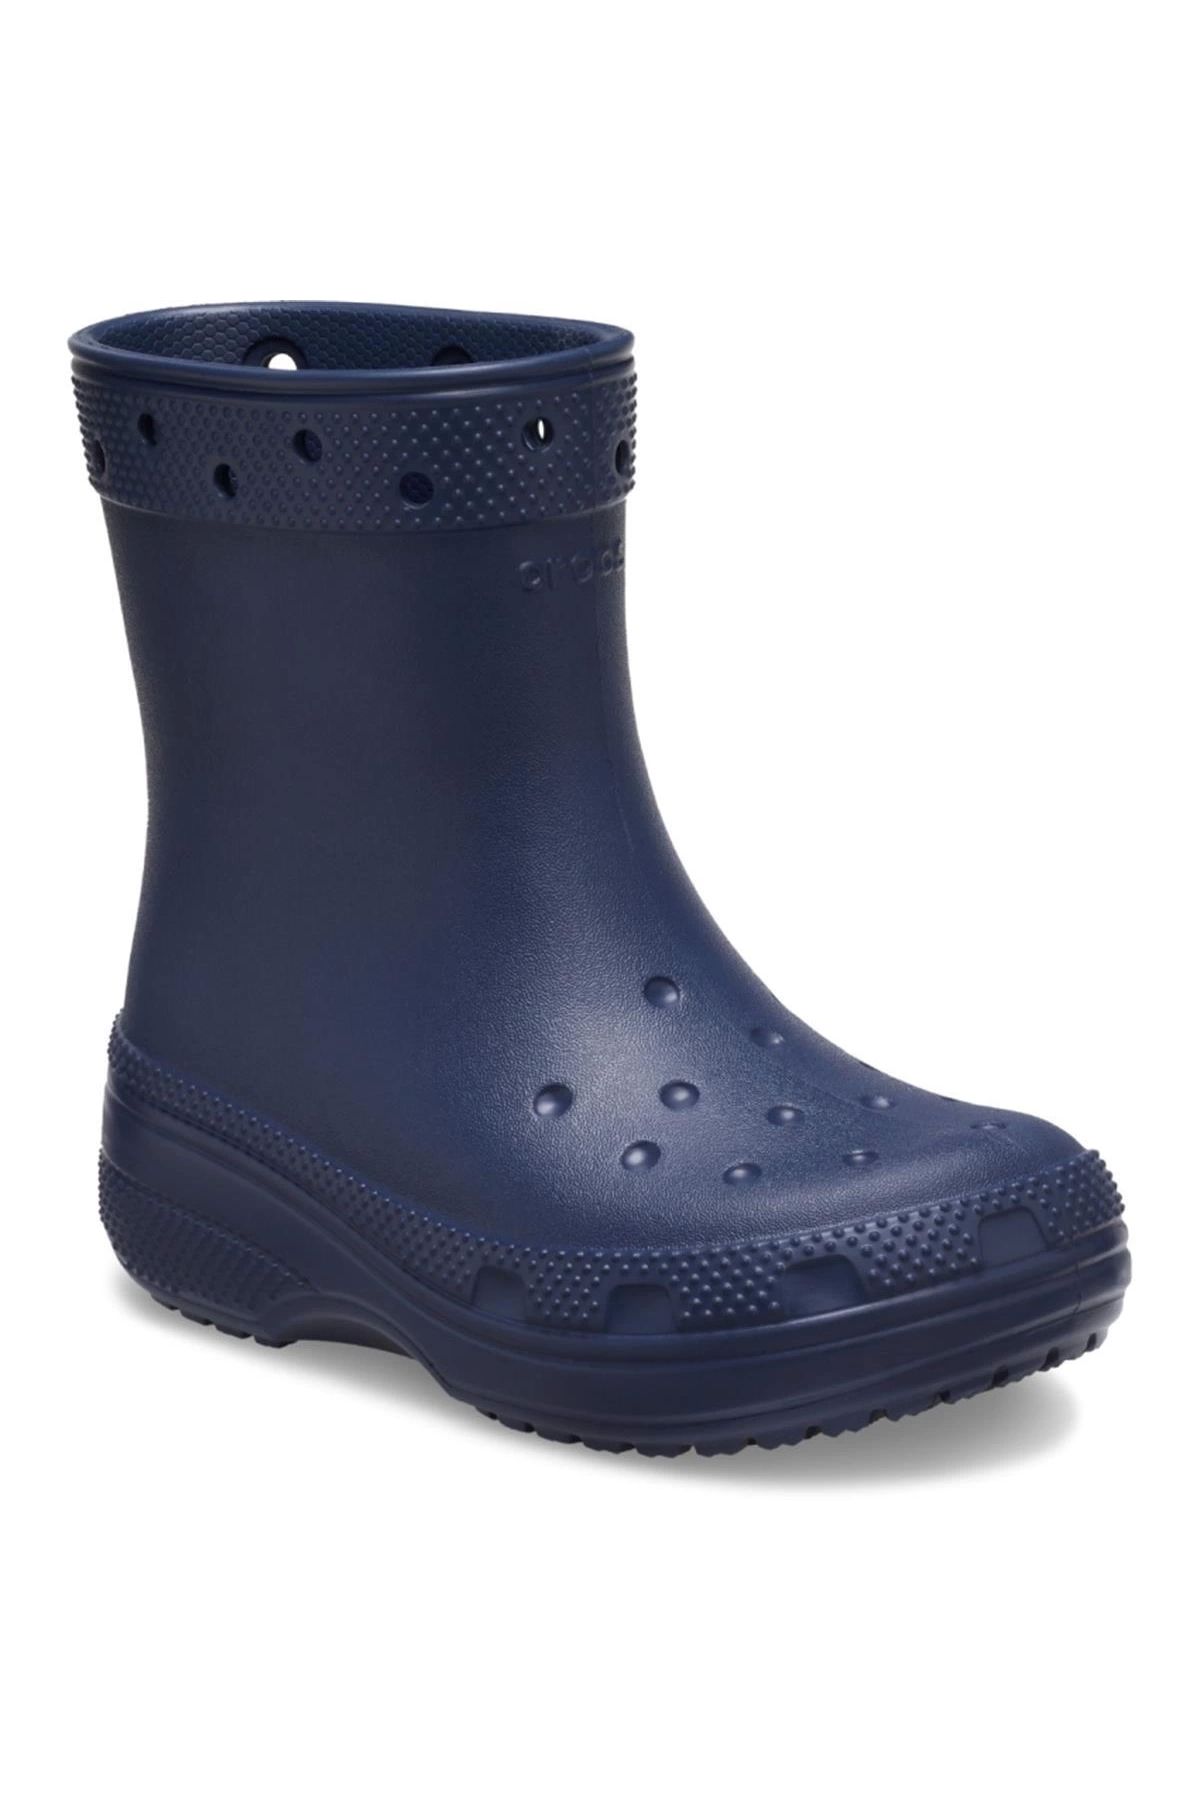 Crocs 208544-410 classıc boot çocuk kışlık çizme bot